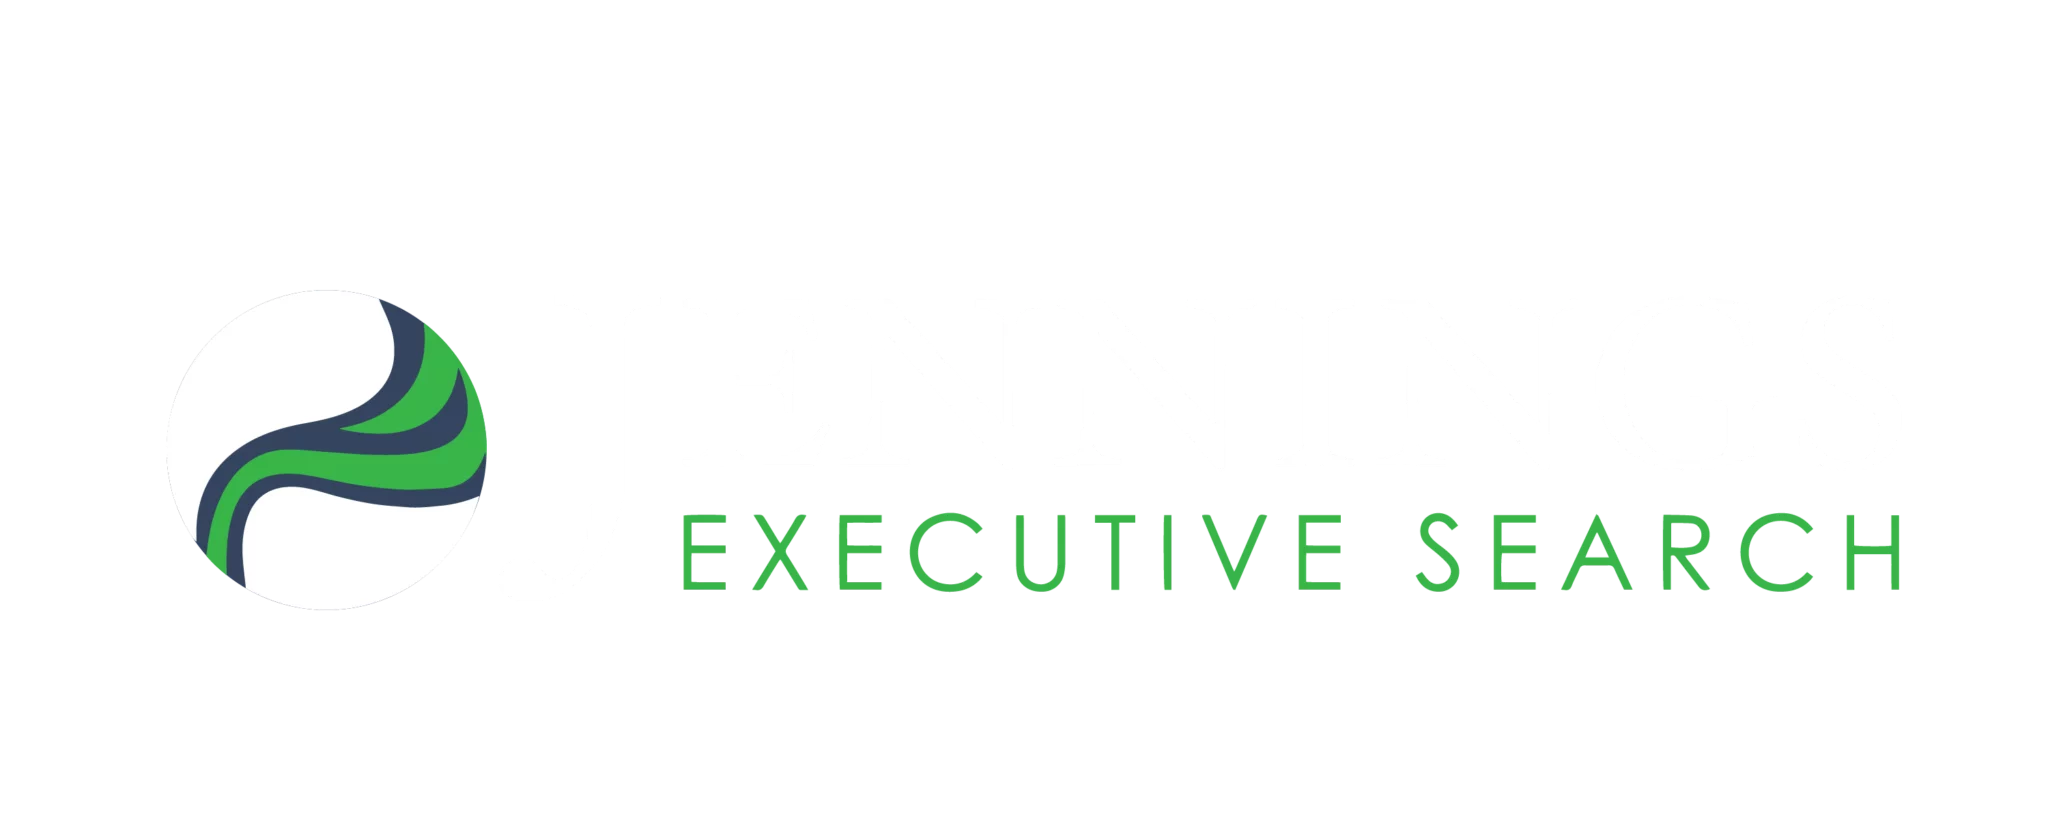 jennings logo